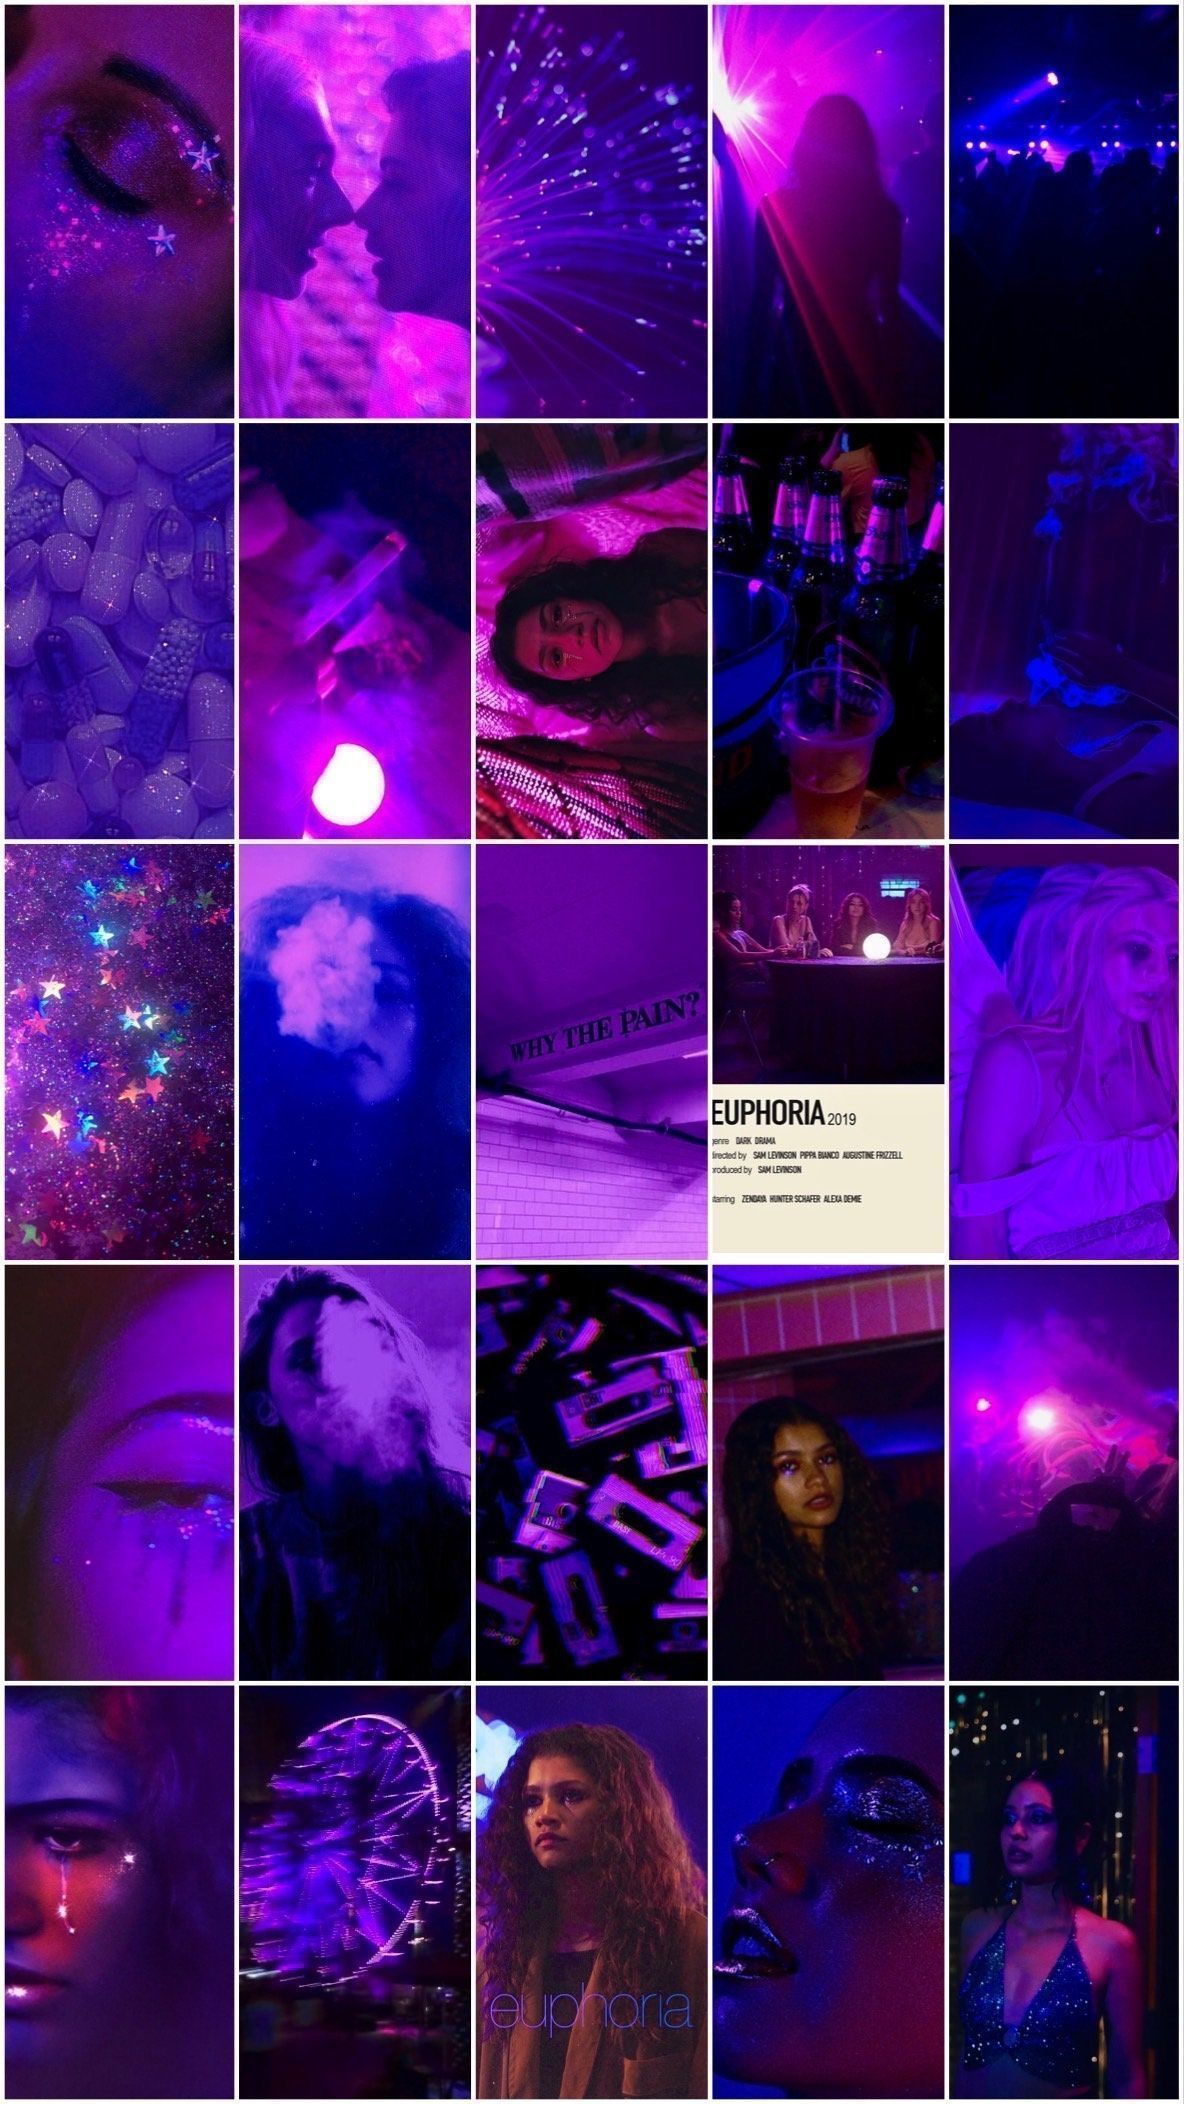 Aesthetic purple and blue photos - Zendaya, Euphoria